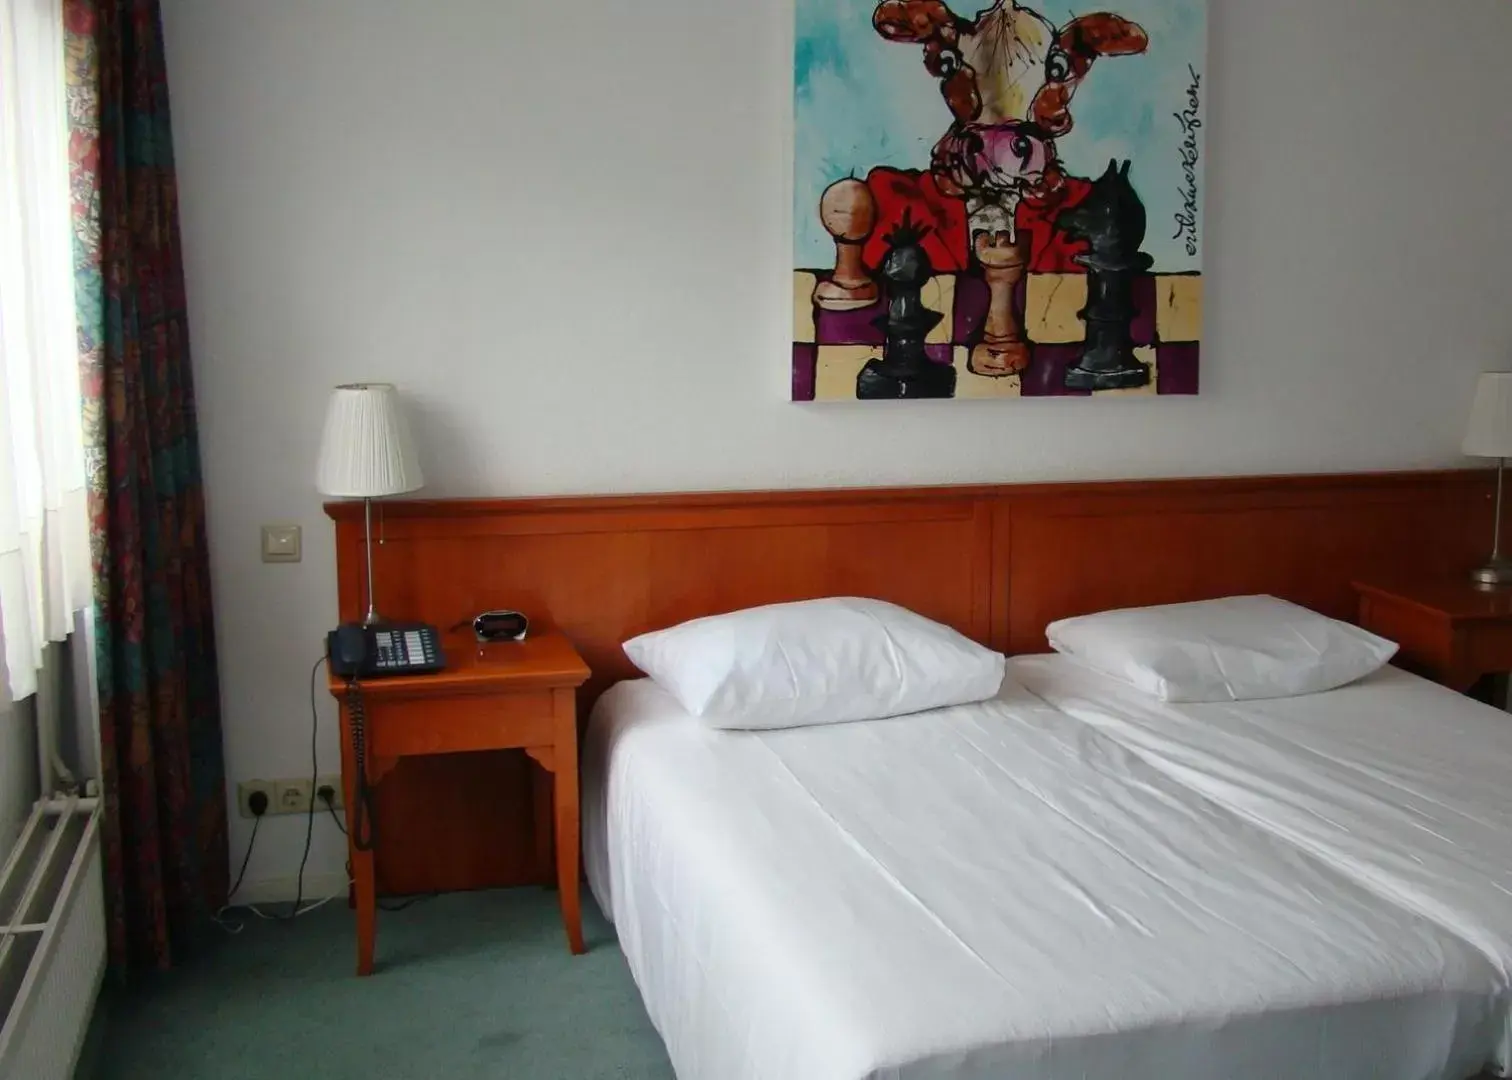 Bed in Hotel & Brasserie de Zwaan Venray